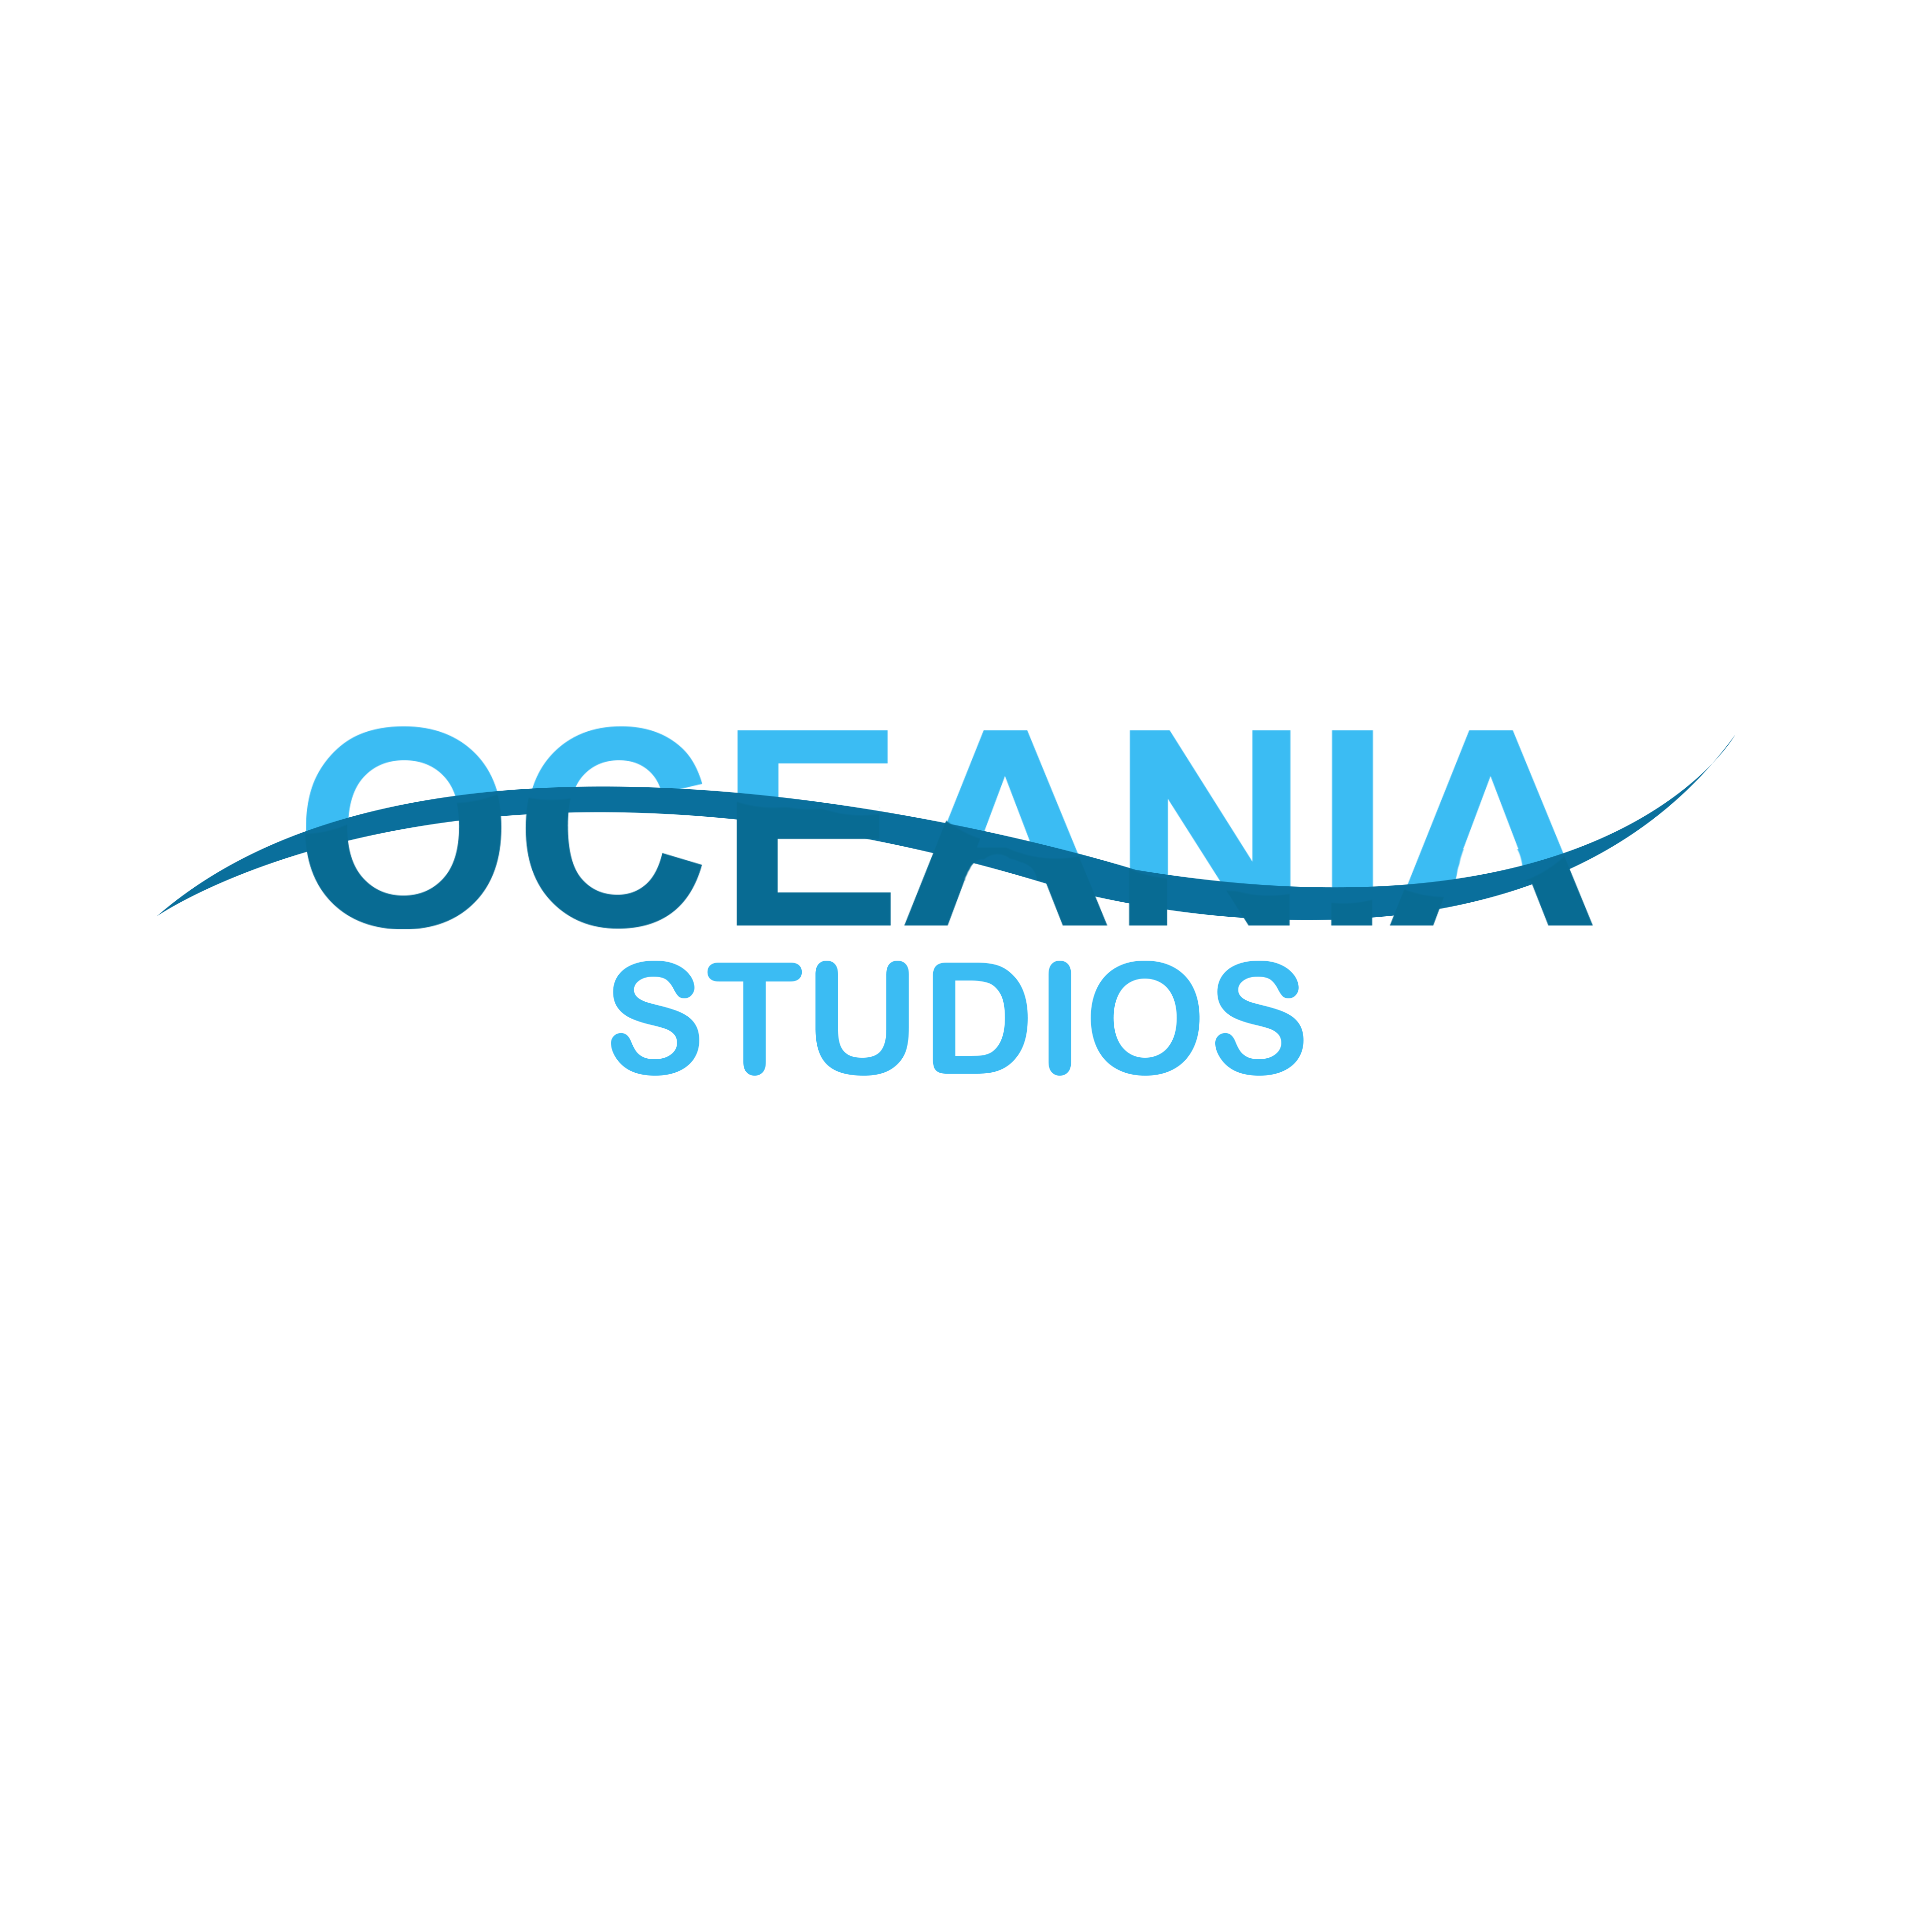 Oceania studios